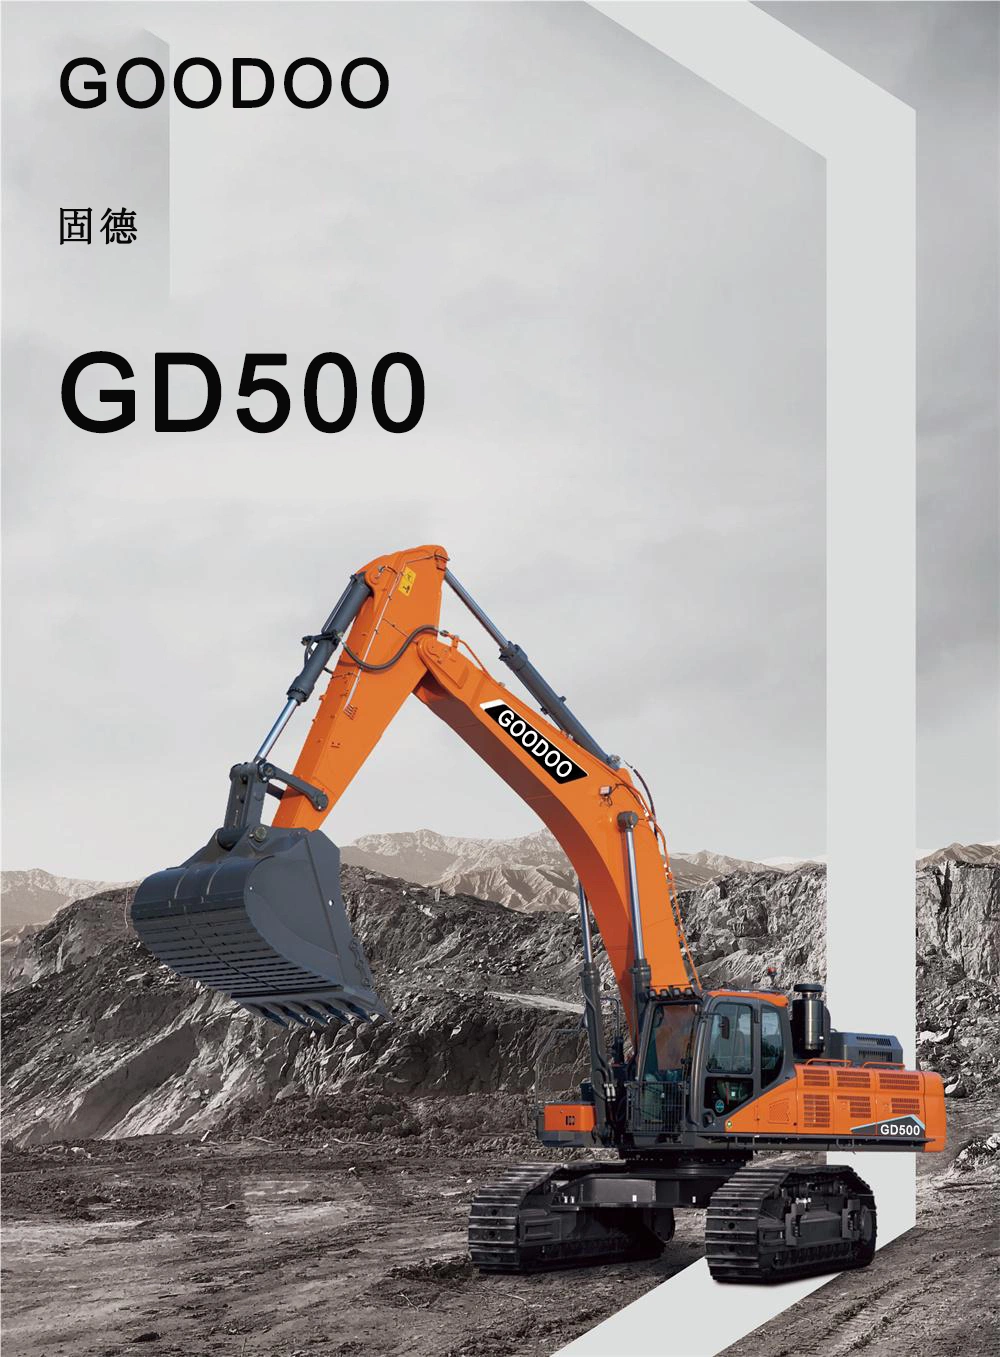 Goodoo Gd500 50ton New Construction Manufacture Machinery Custom Made China Heavy Duty Hydraulic Backhoe Crawler Excavator Gold Mining Excavator Good Price